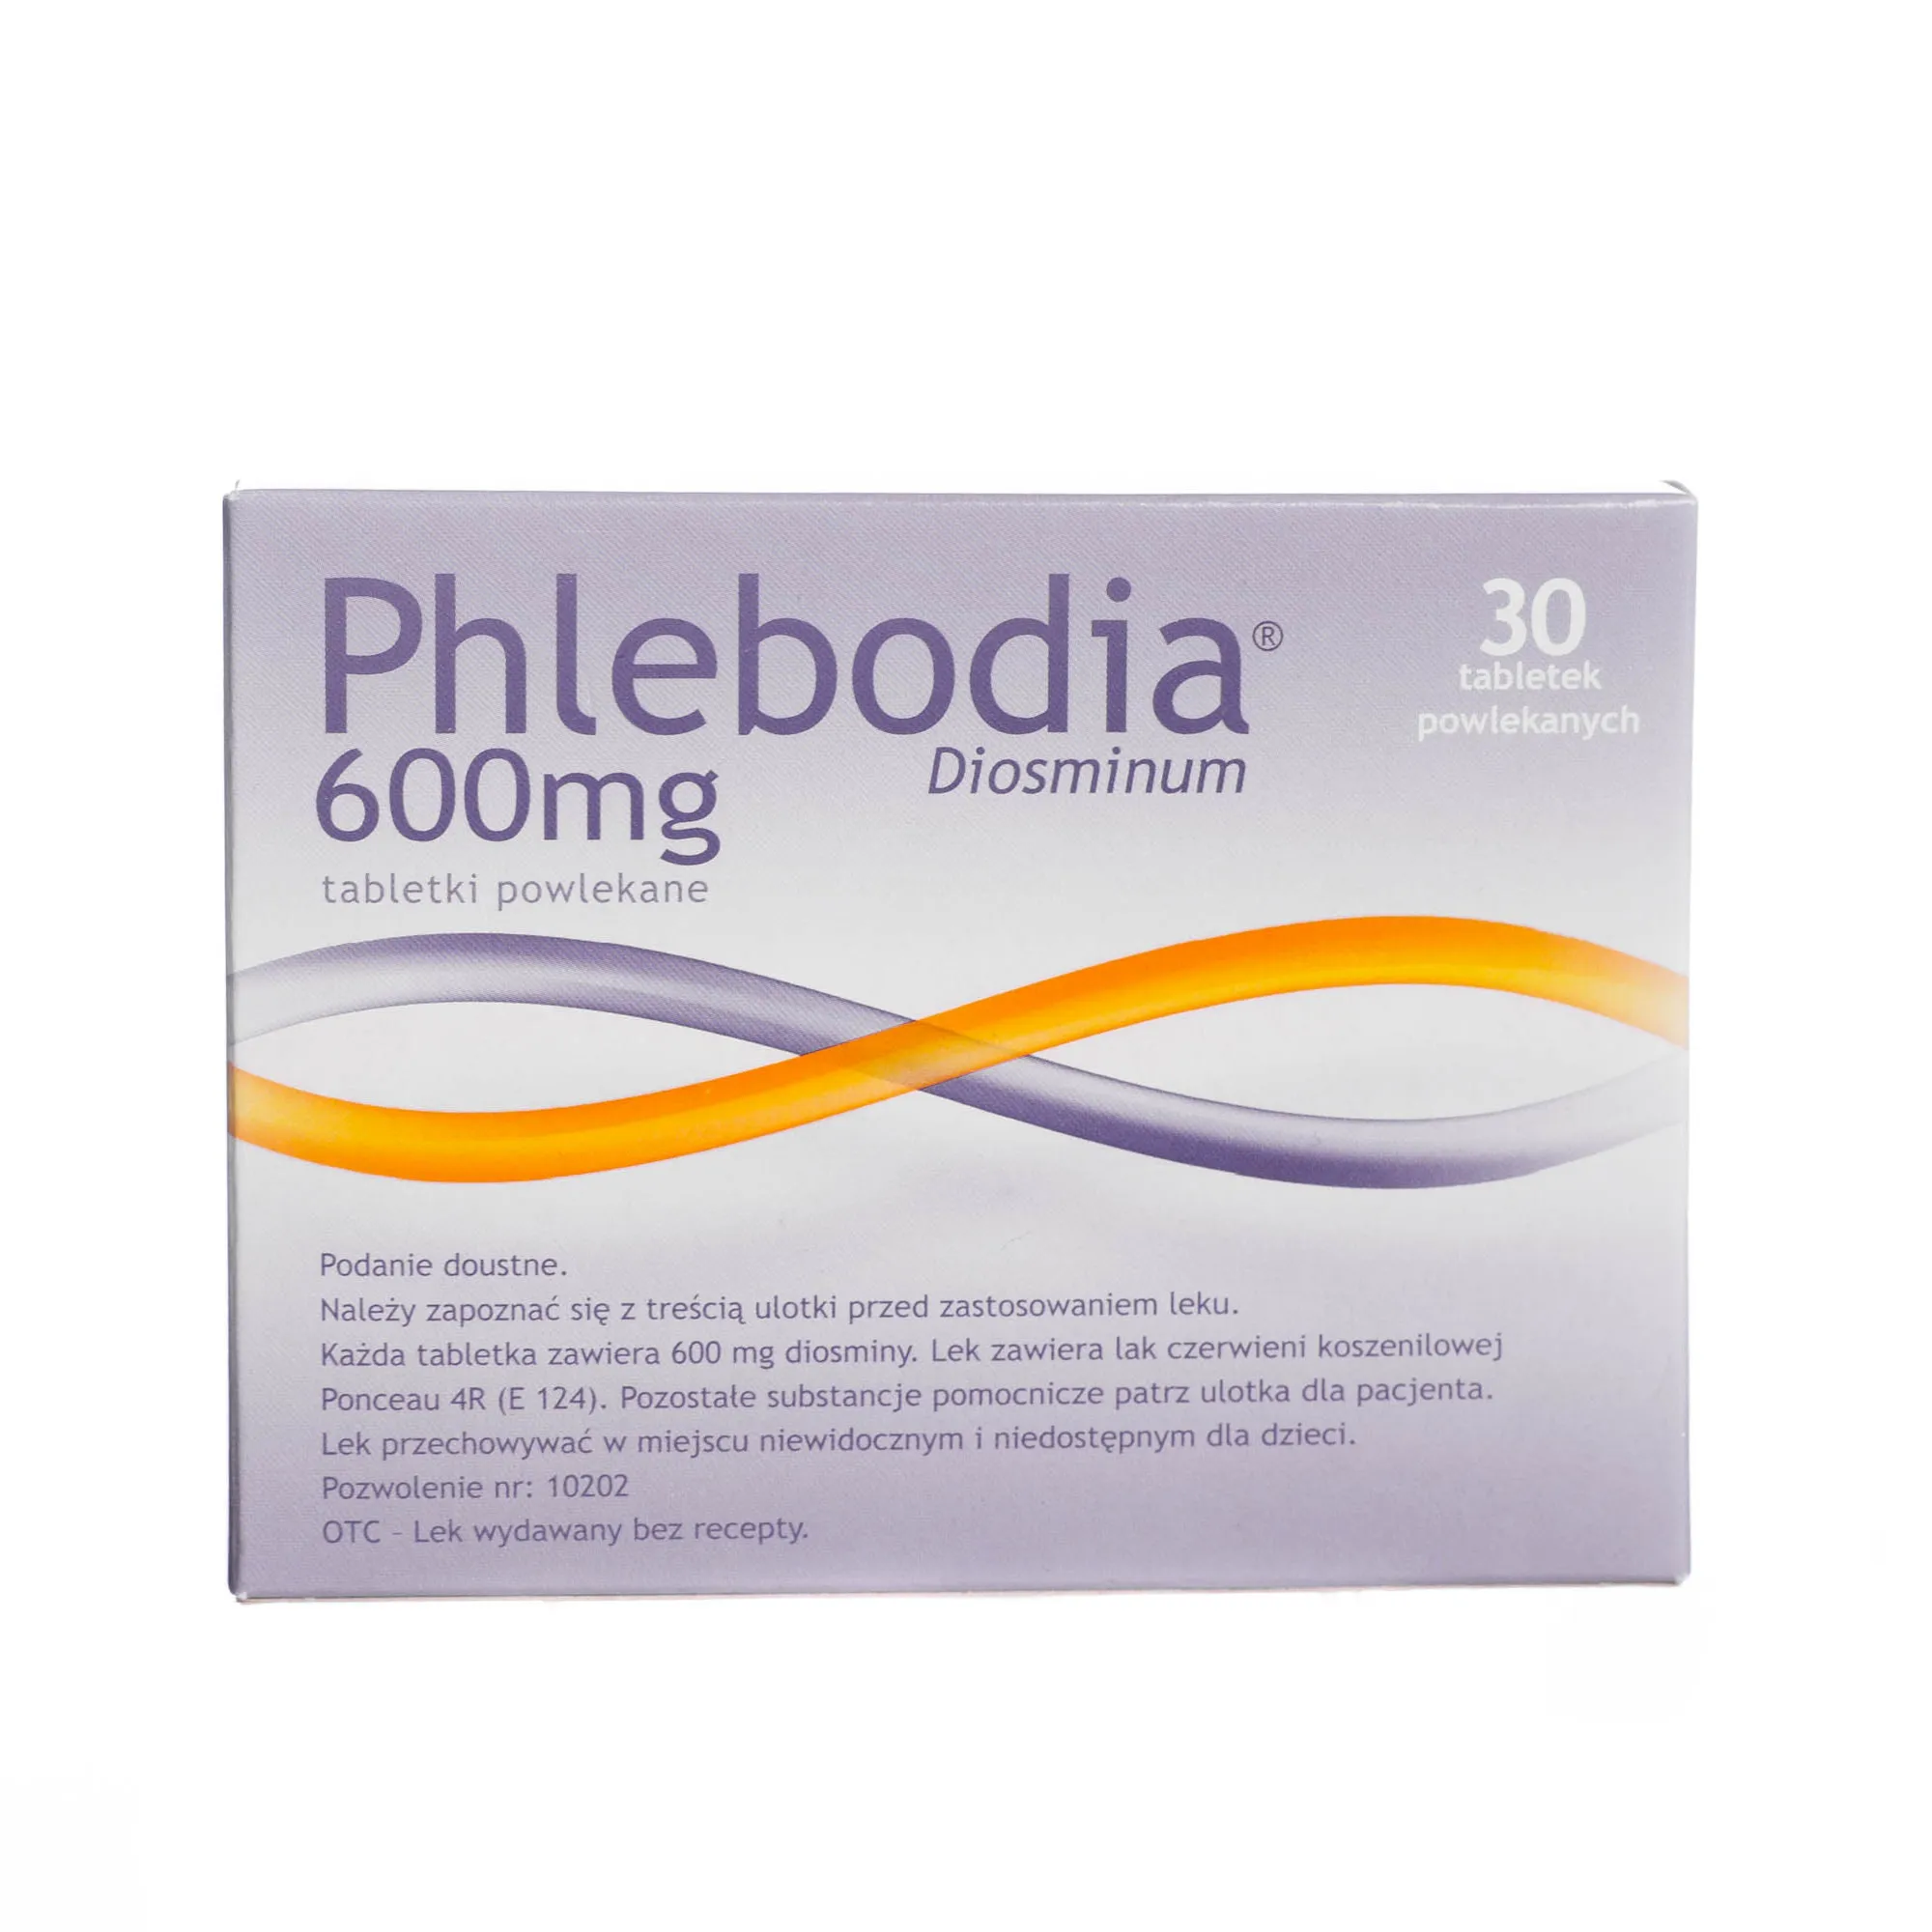 Phlebodia, 600mg, 30 tabletek powlekanych 